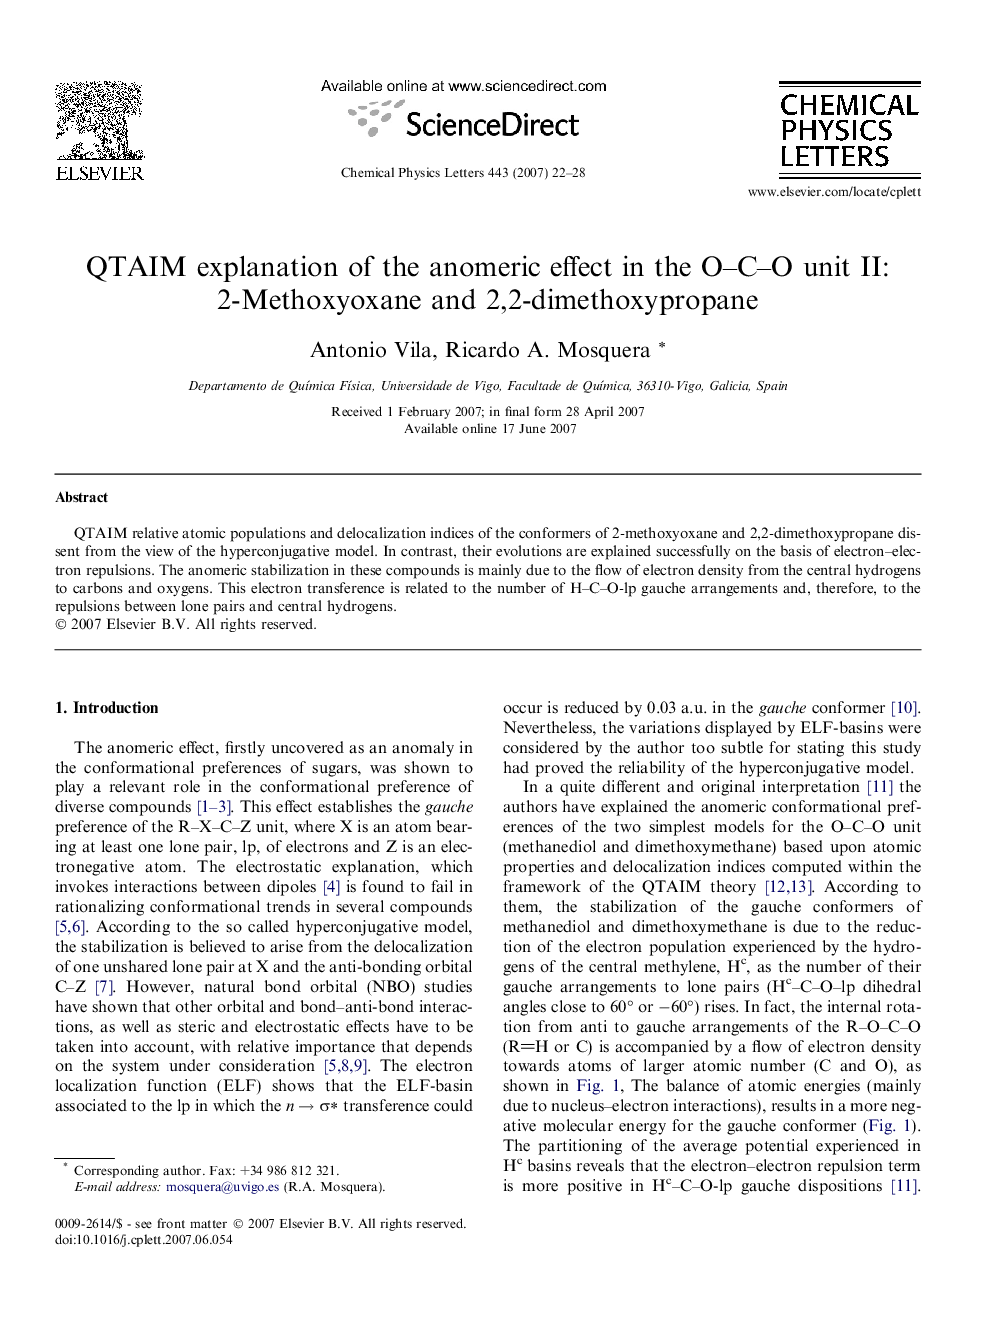 QTAIM explanation of the anomeric effect in the O-C-O unit II: 2-Methoxyoxane and 2,2-dimethoxypropane